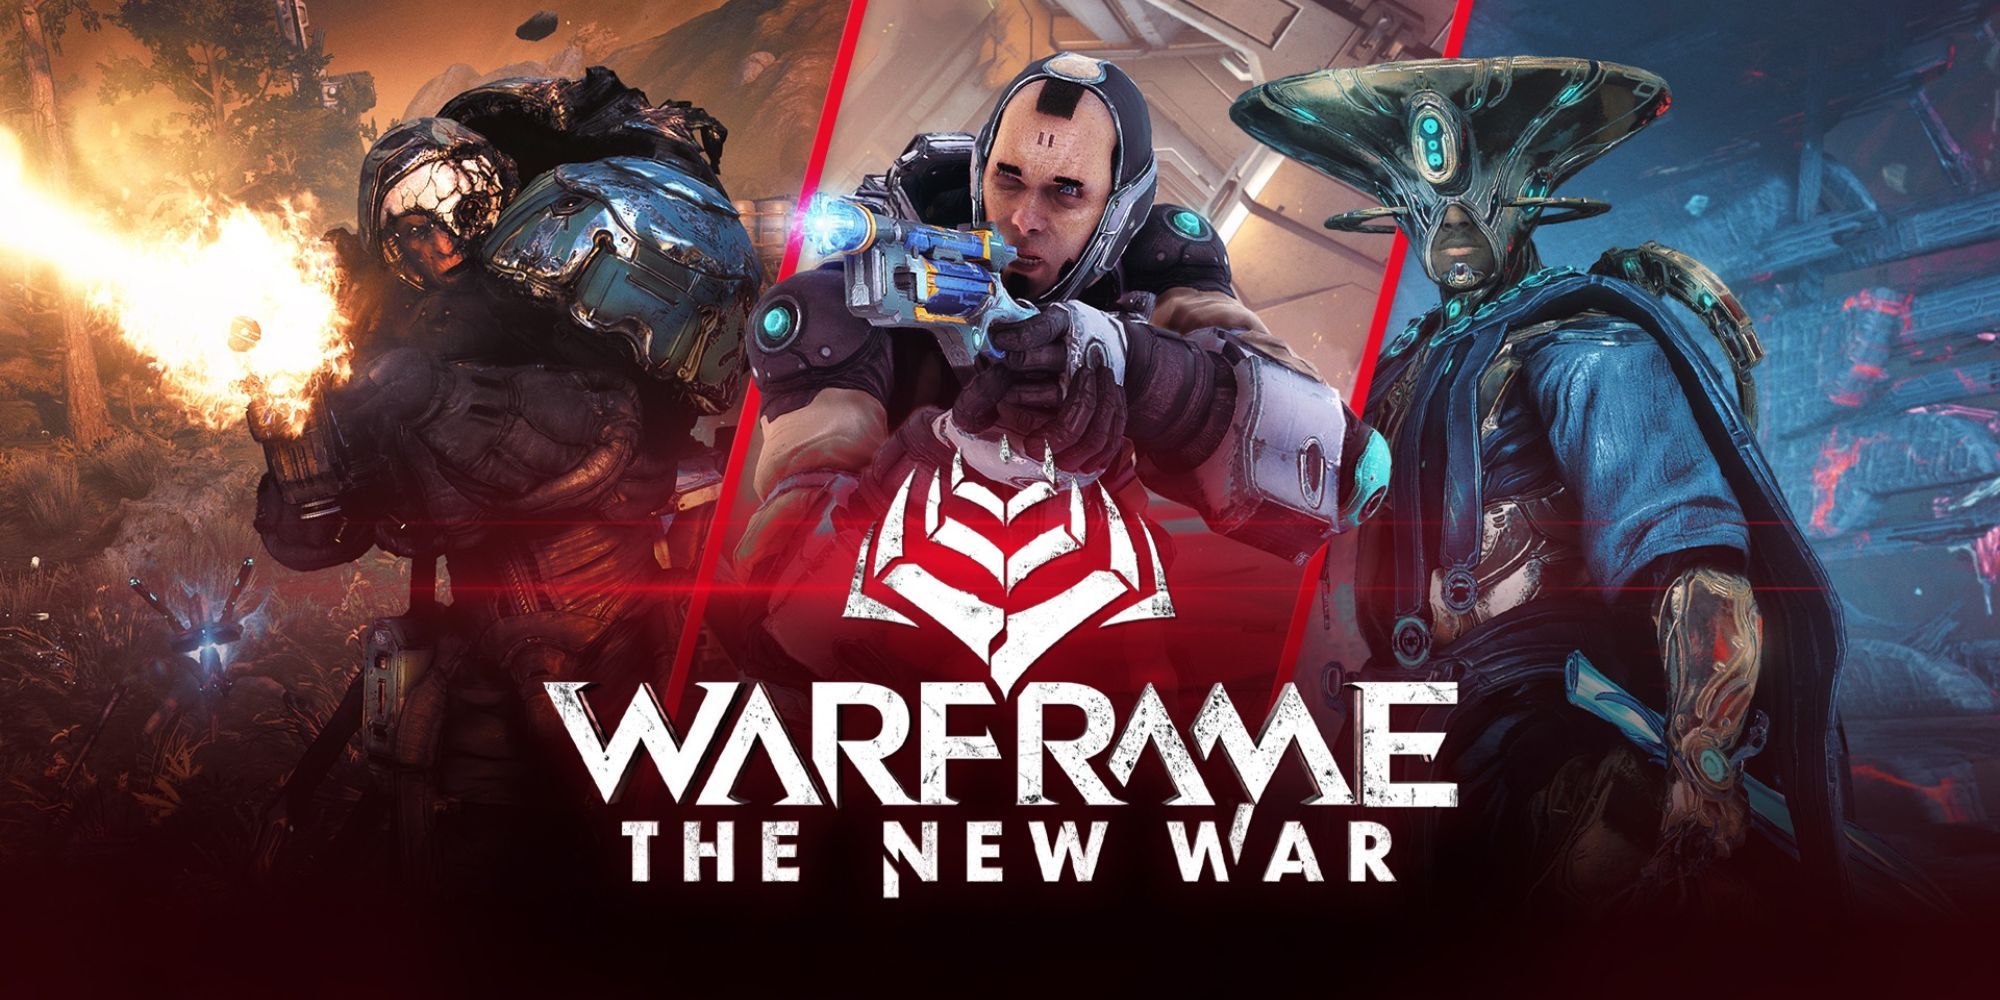 Warframe The New War characters